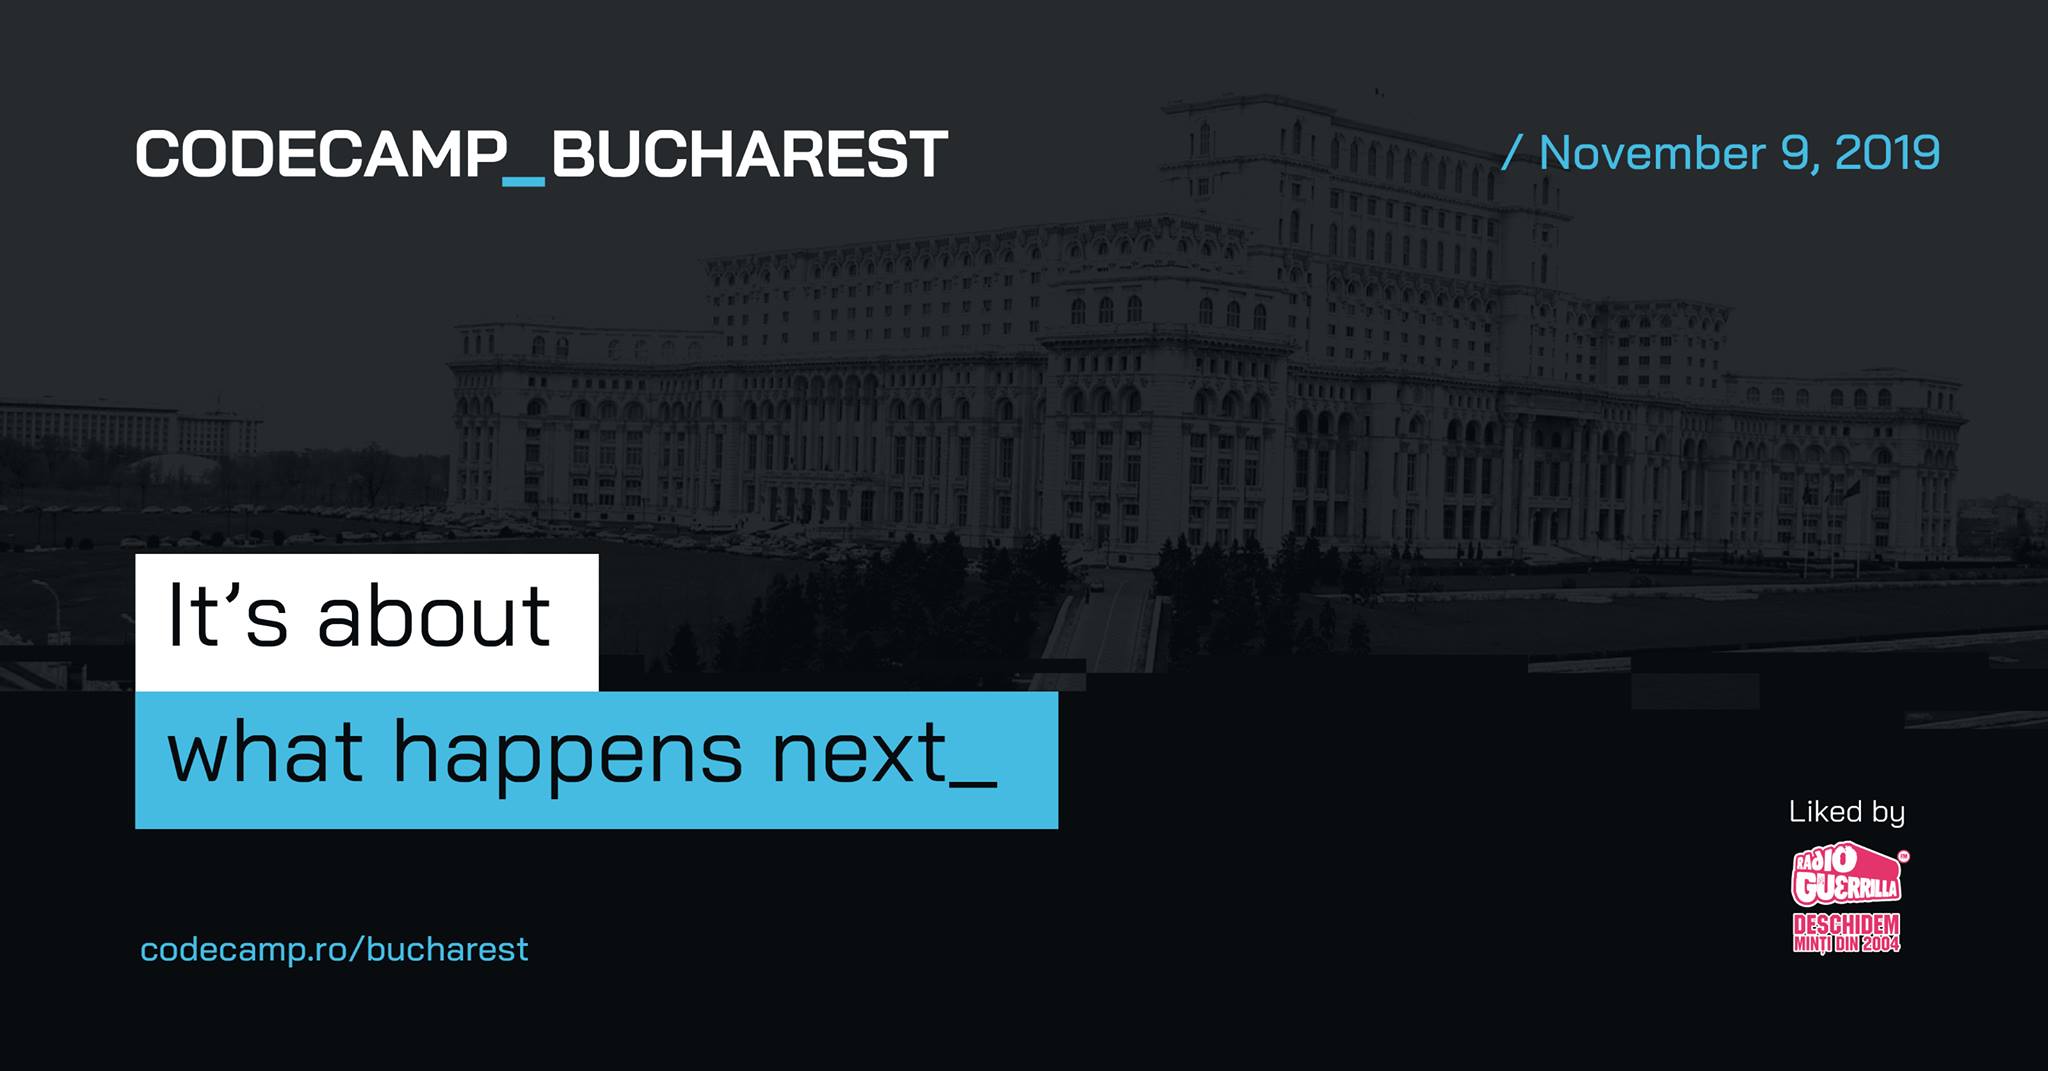 Codecamp Bucharest